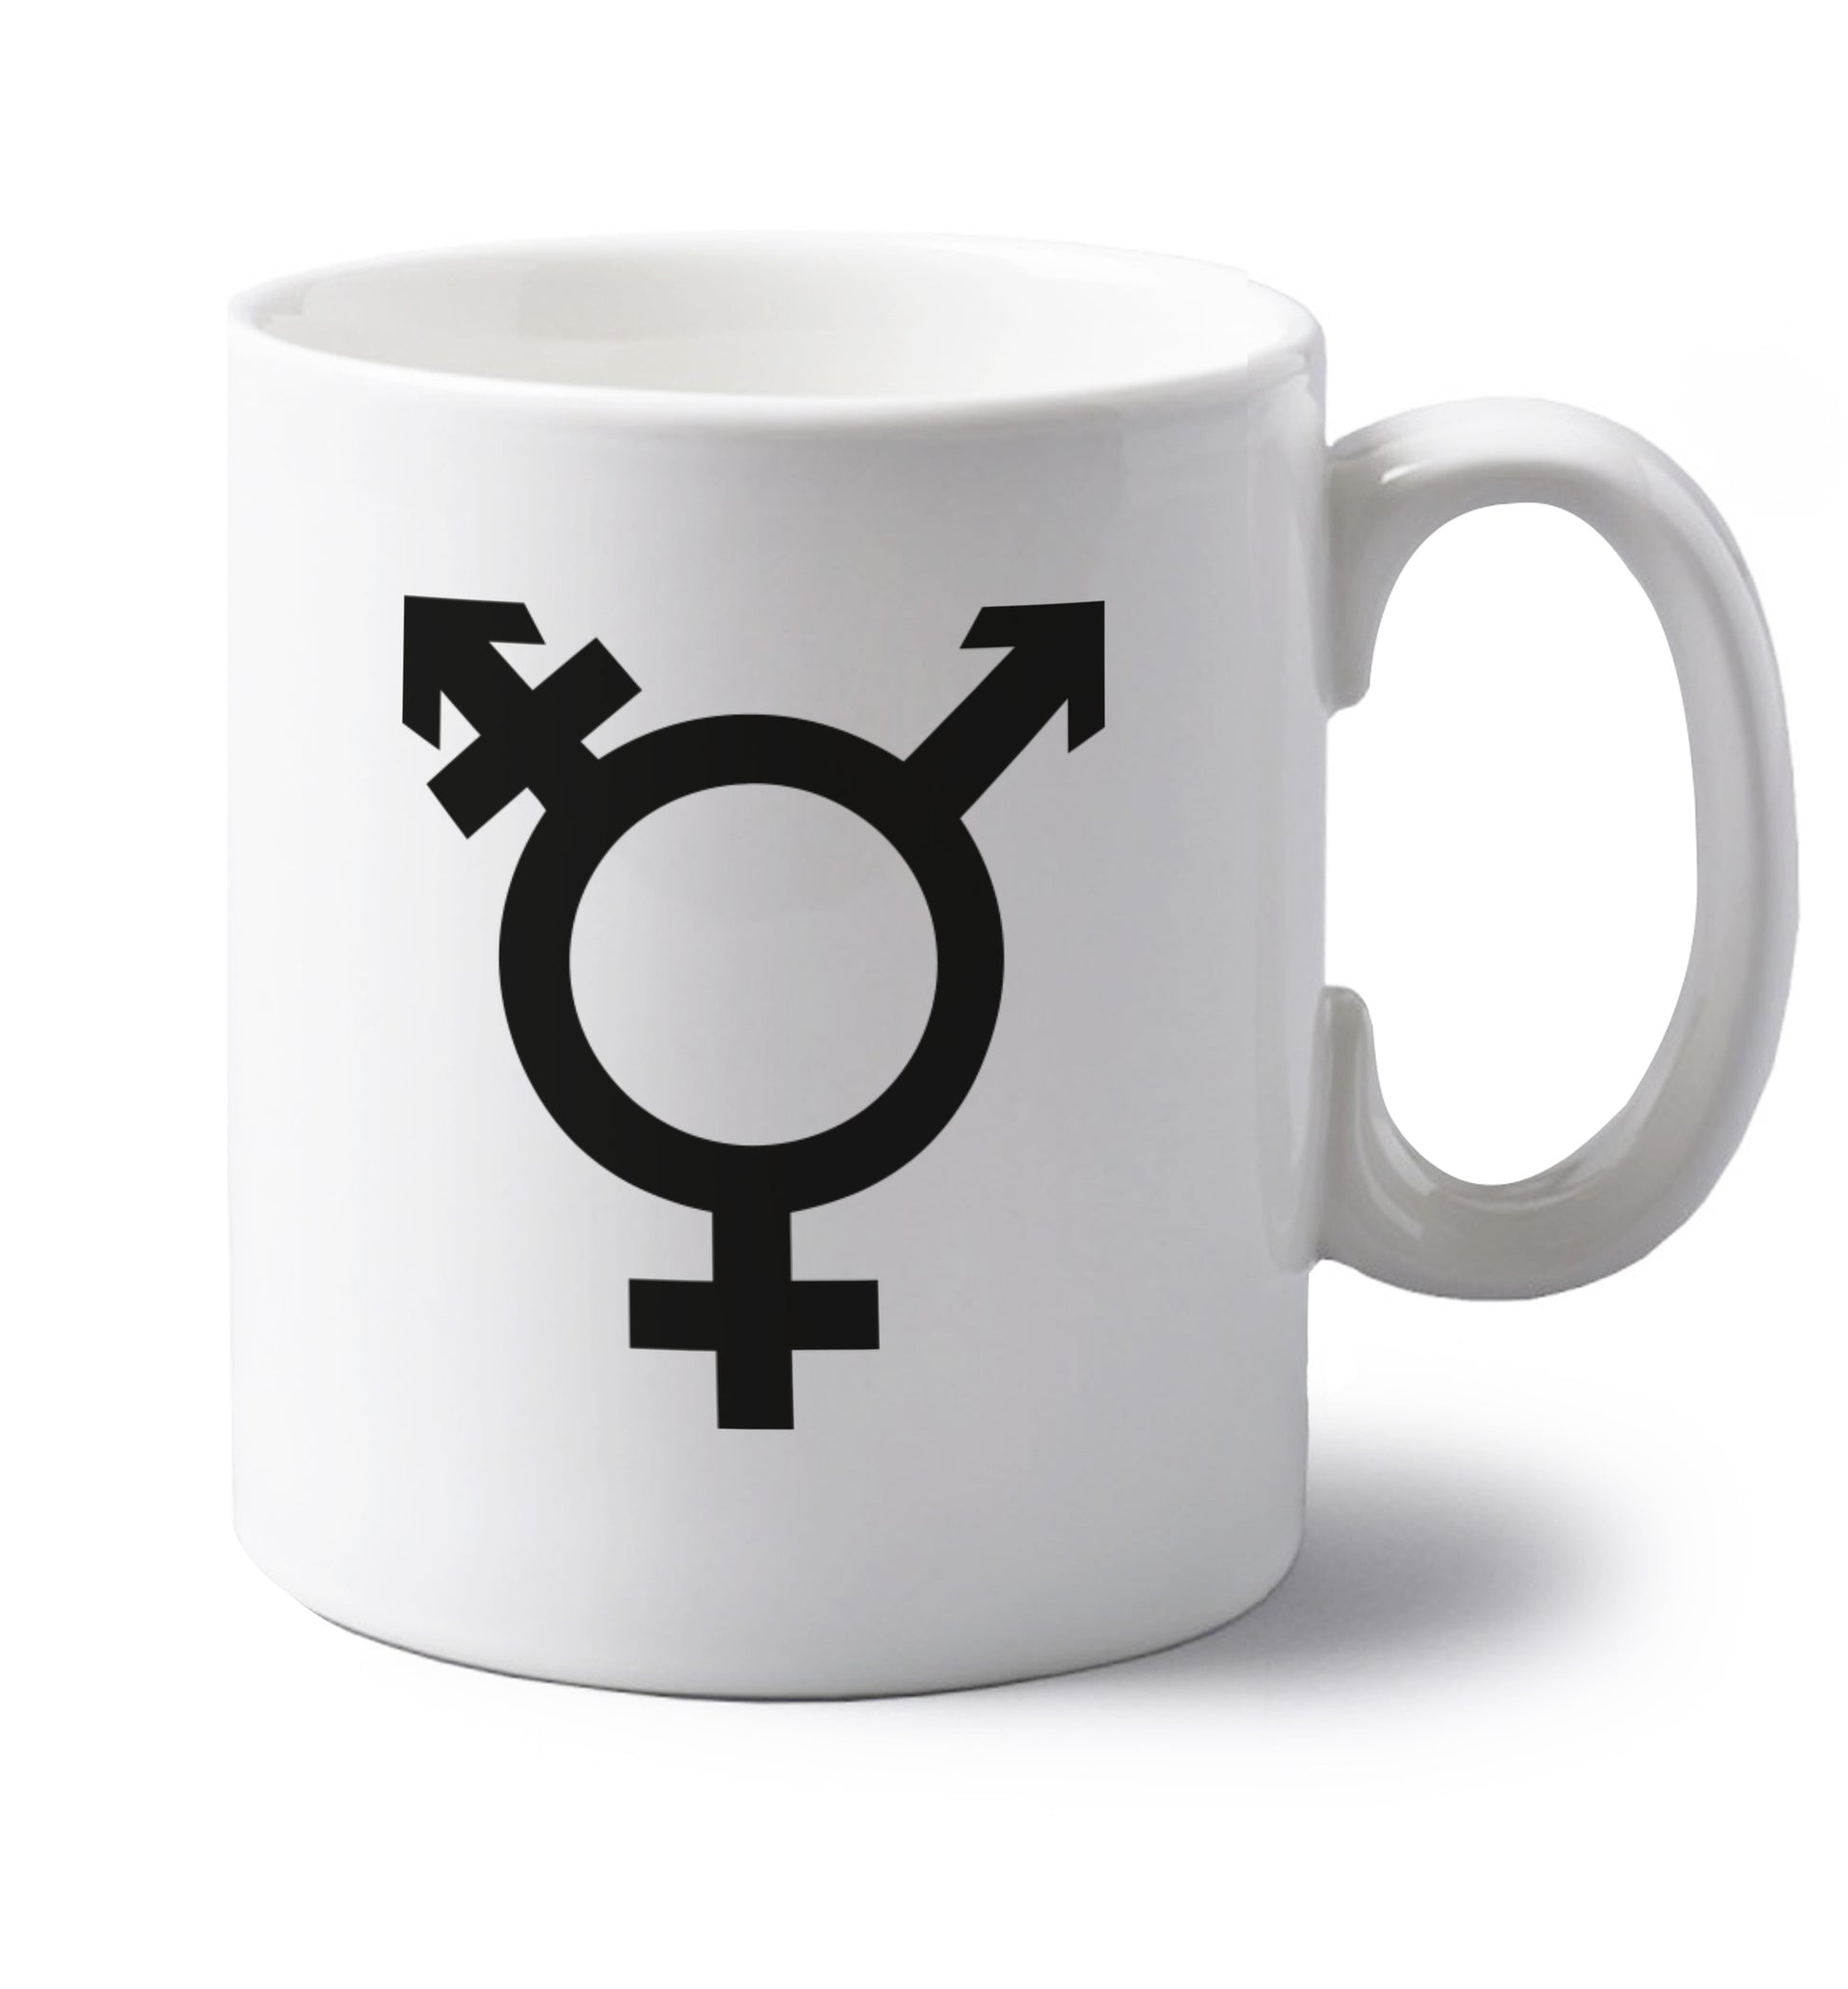 Gender neutral symbol large left handed white ceramic mug 